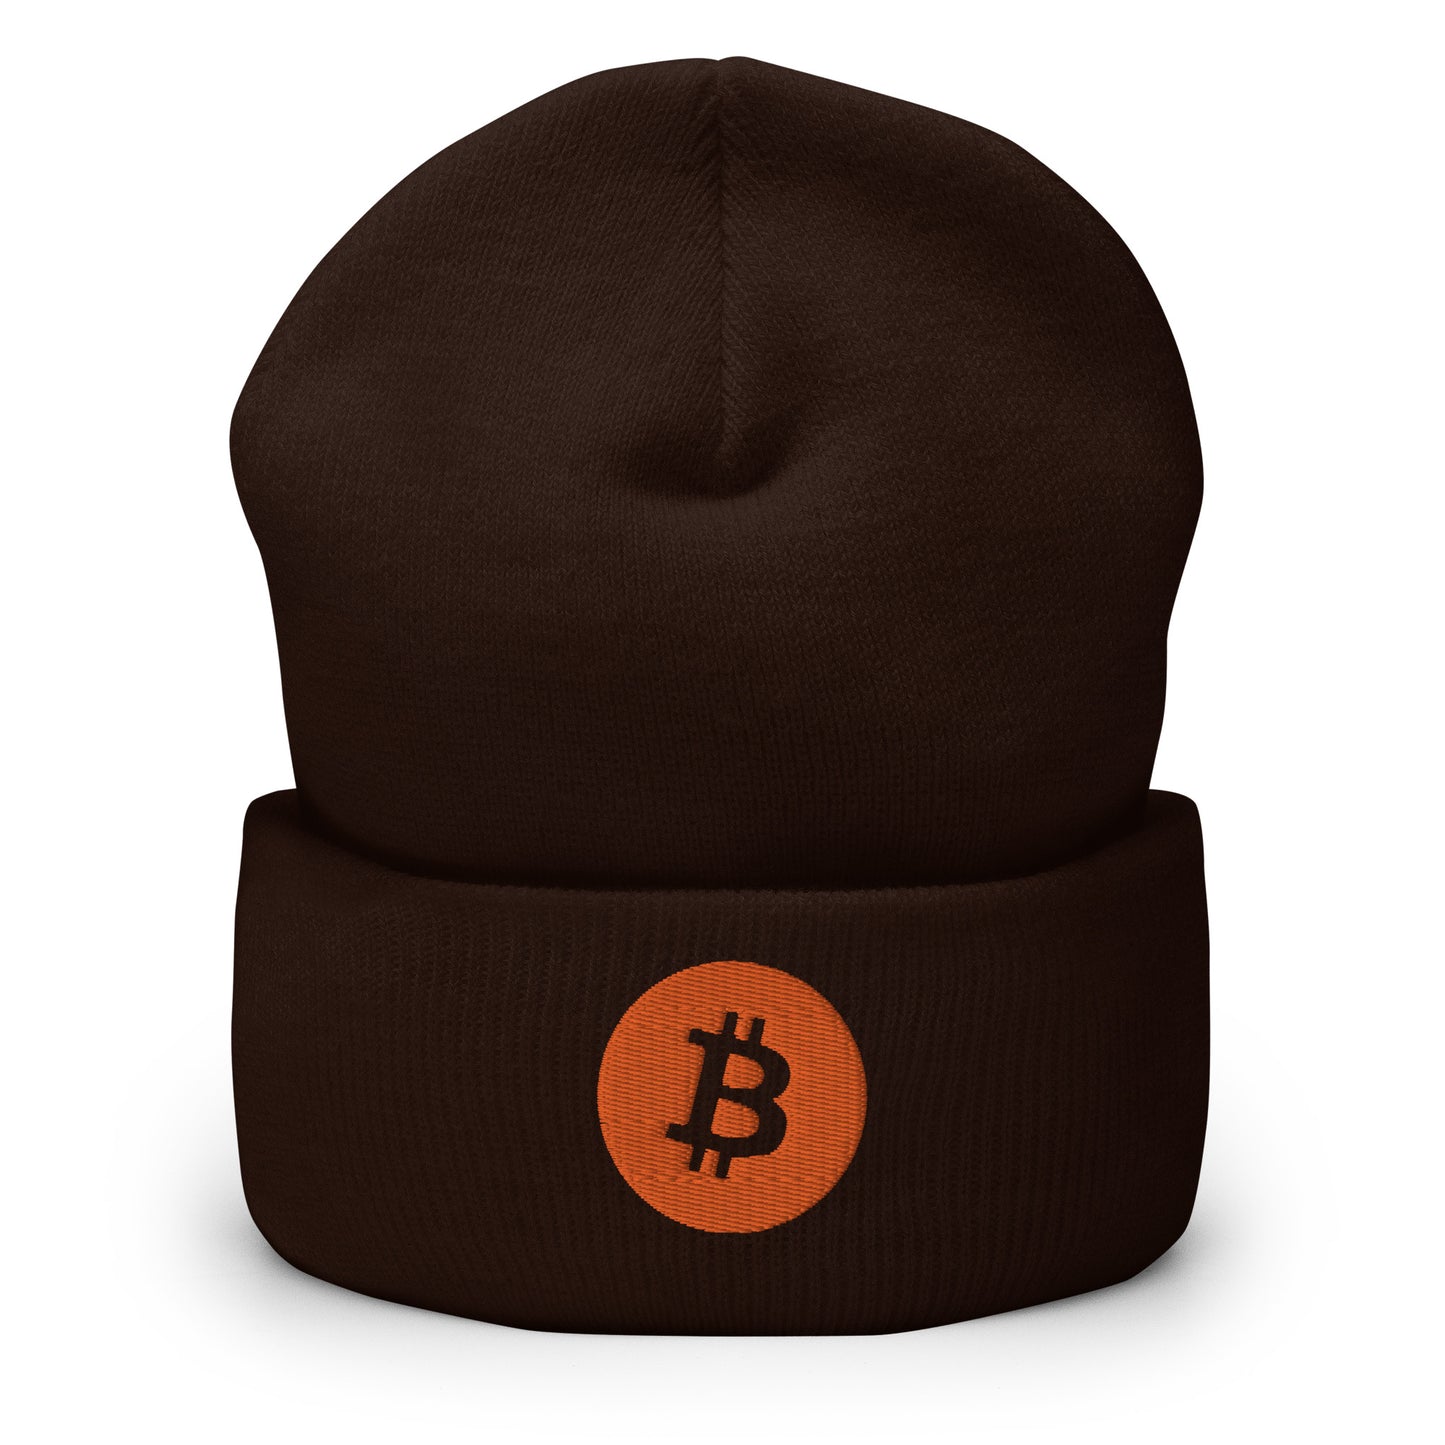 Bitcoin Cuffed Beanie - Hodlers Crypto Merch Brand